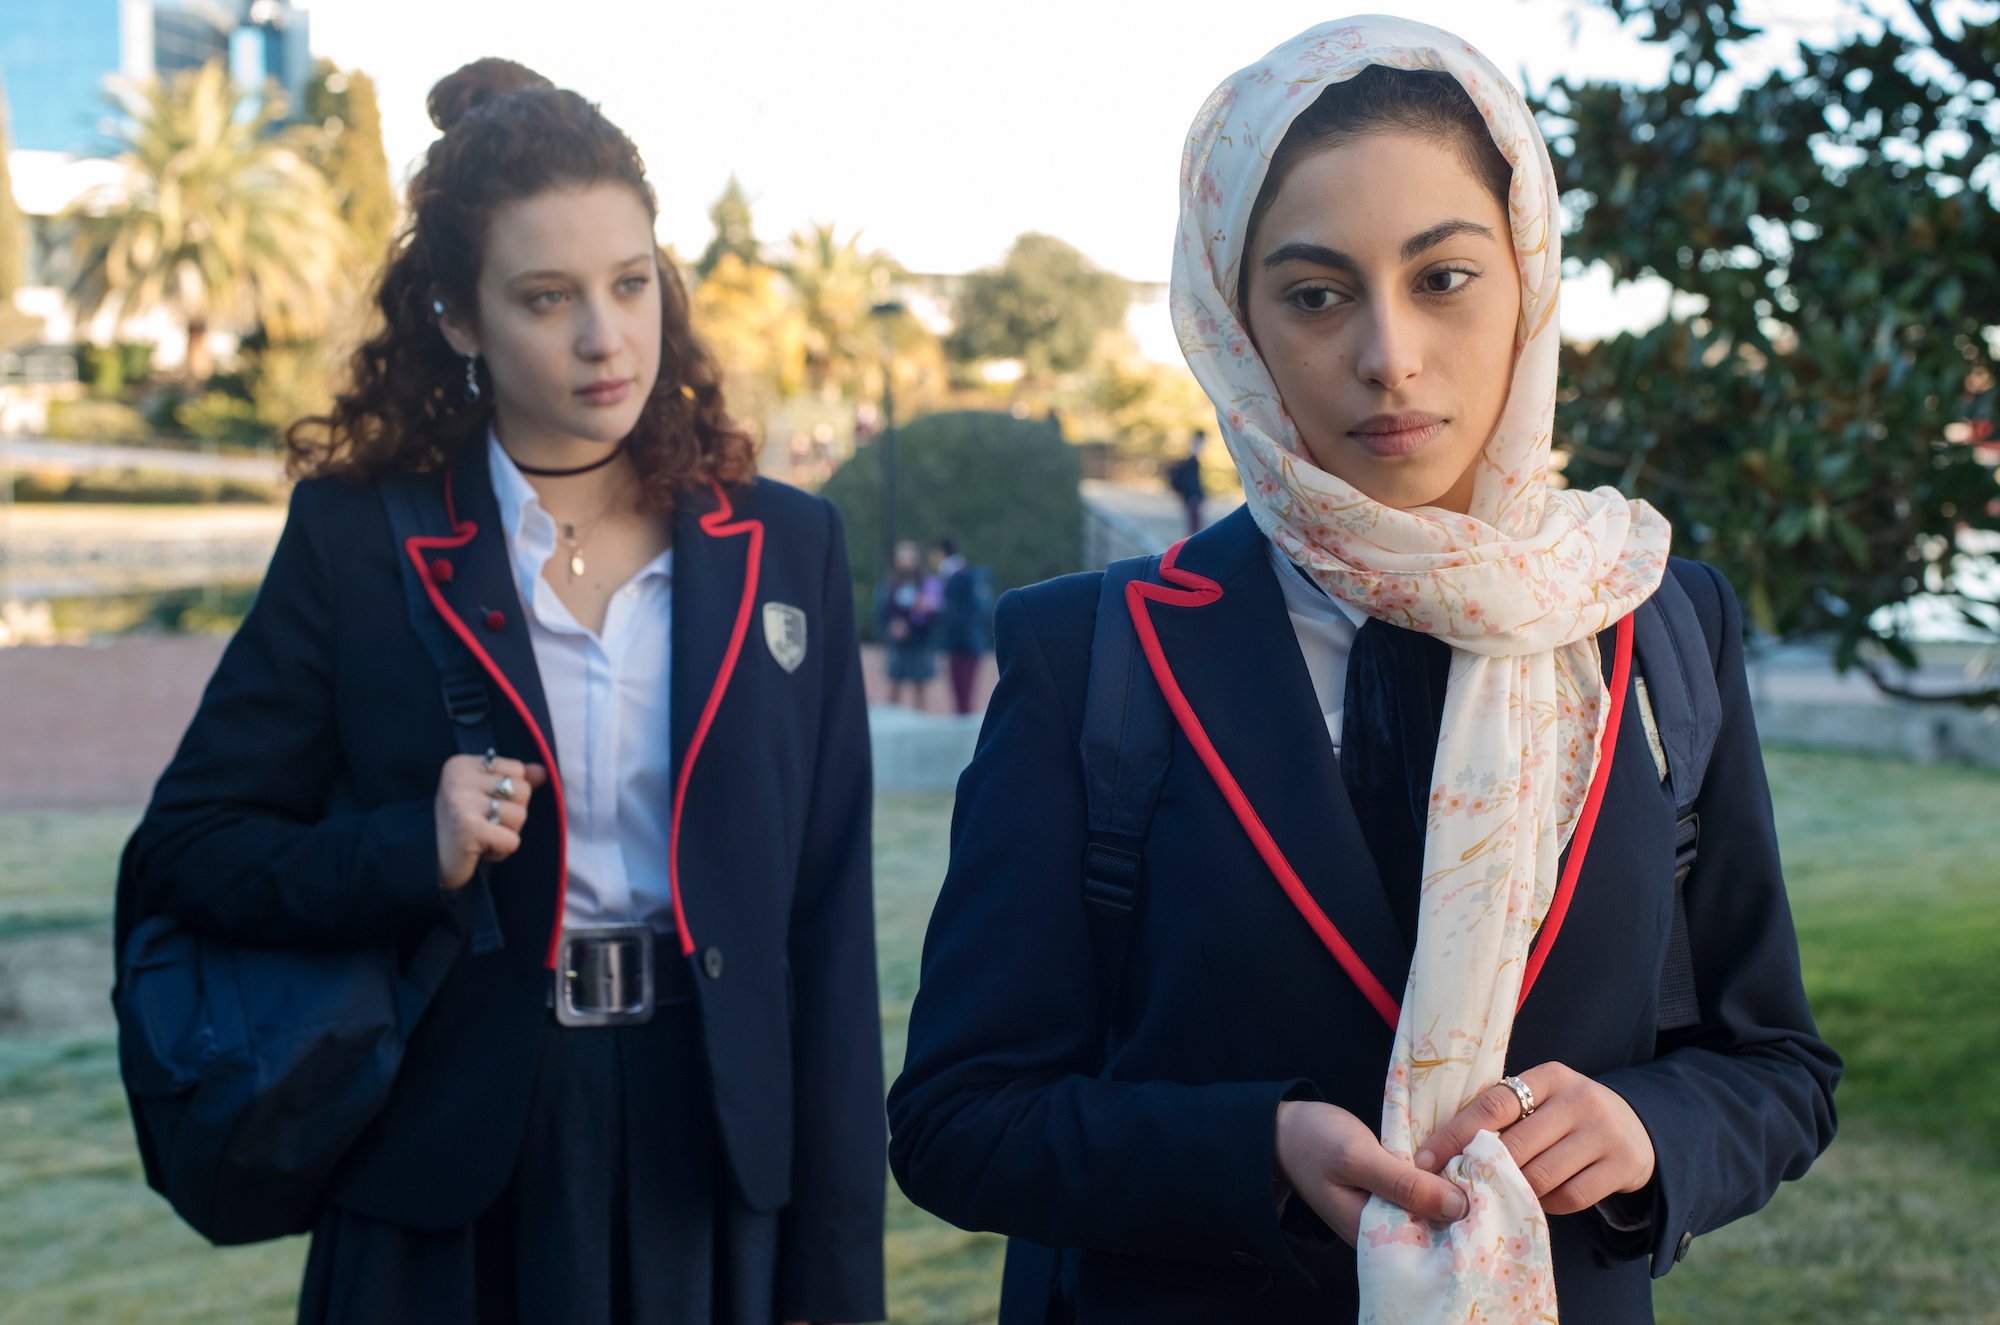 Maria Pedraza, and Mina El Hammani wearing school uniforms in 'Elite' Season 1.